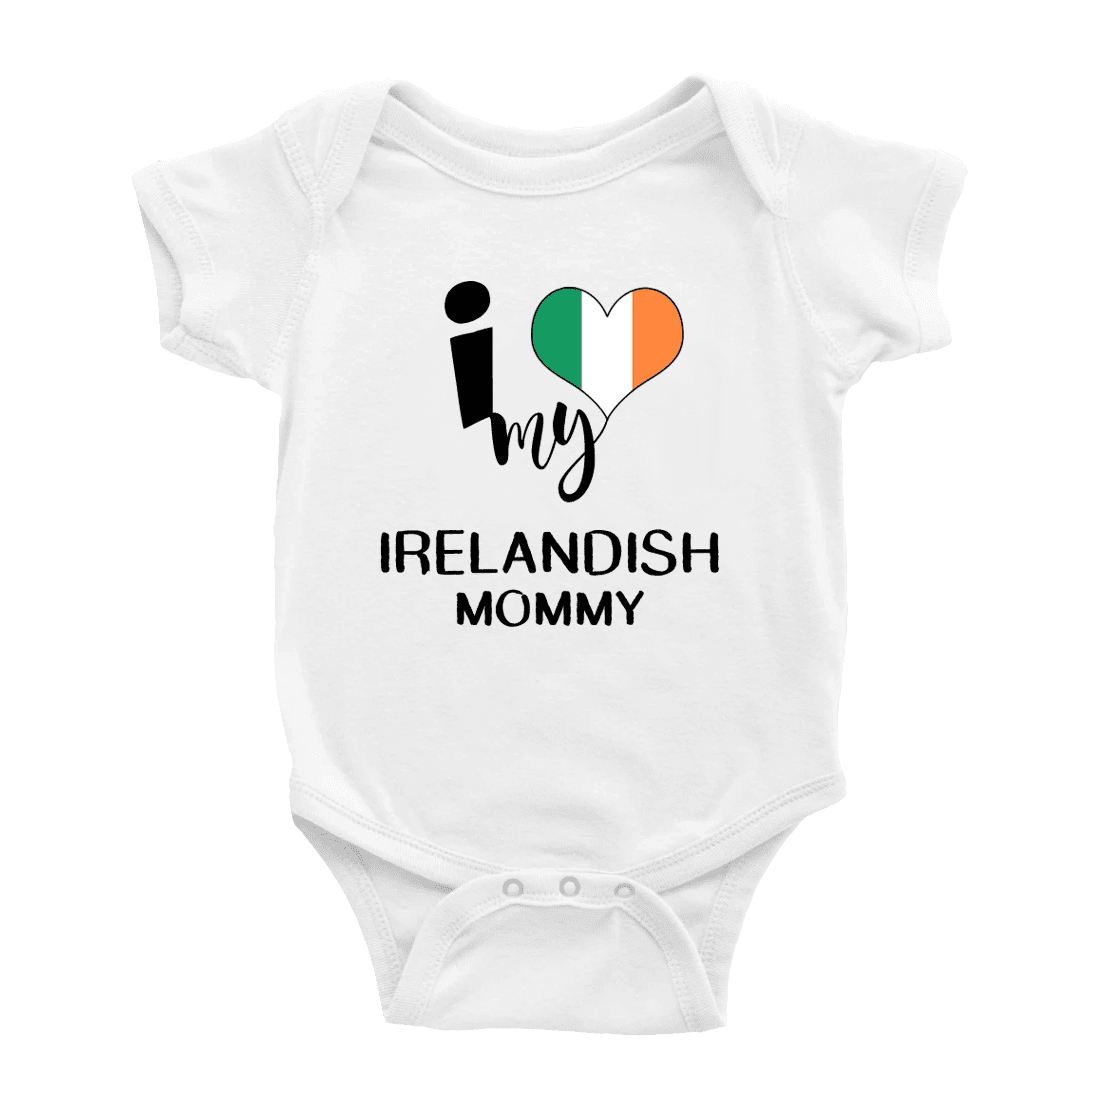 Love Ireland? Consider Celtic Clothing